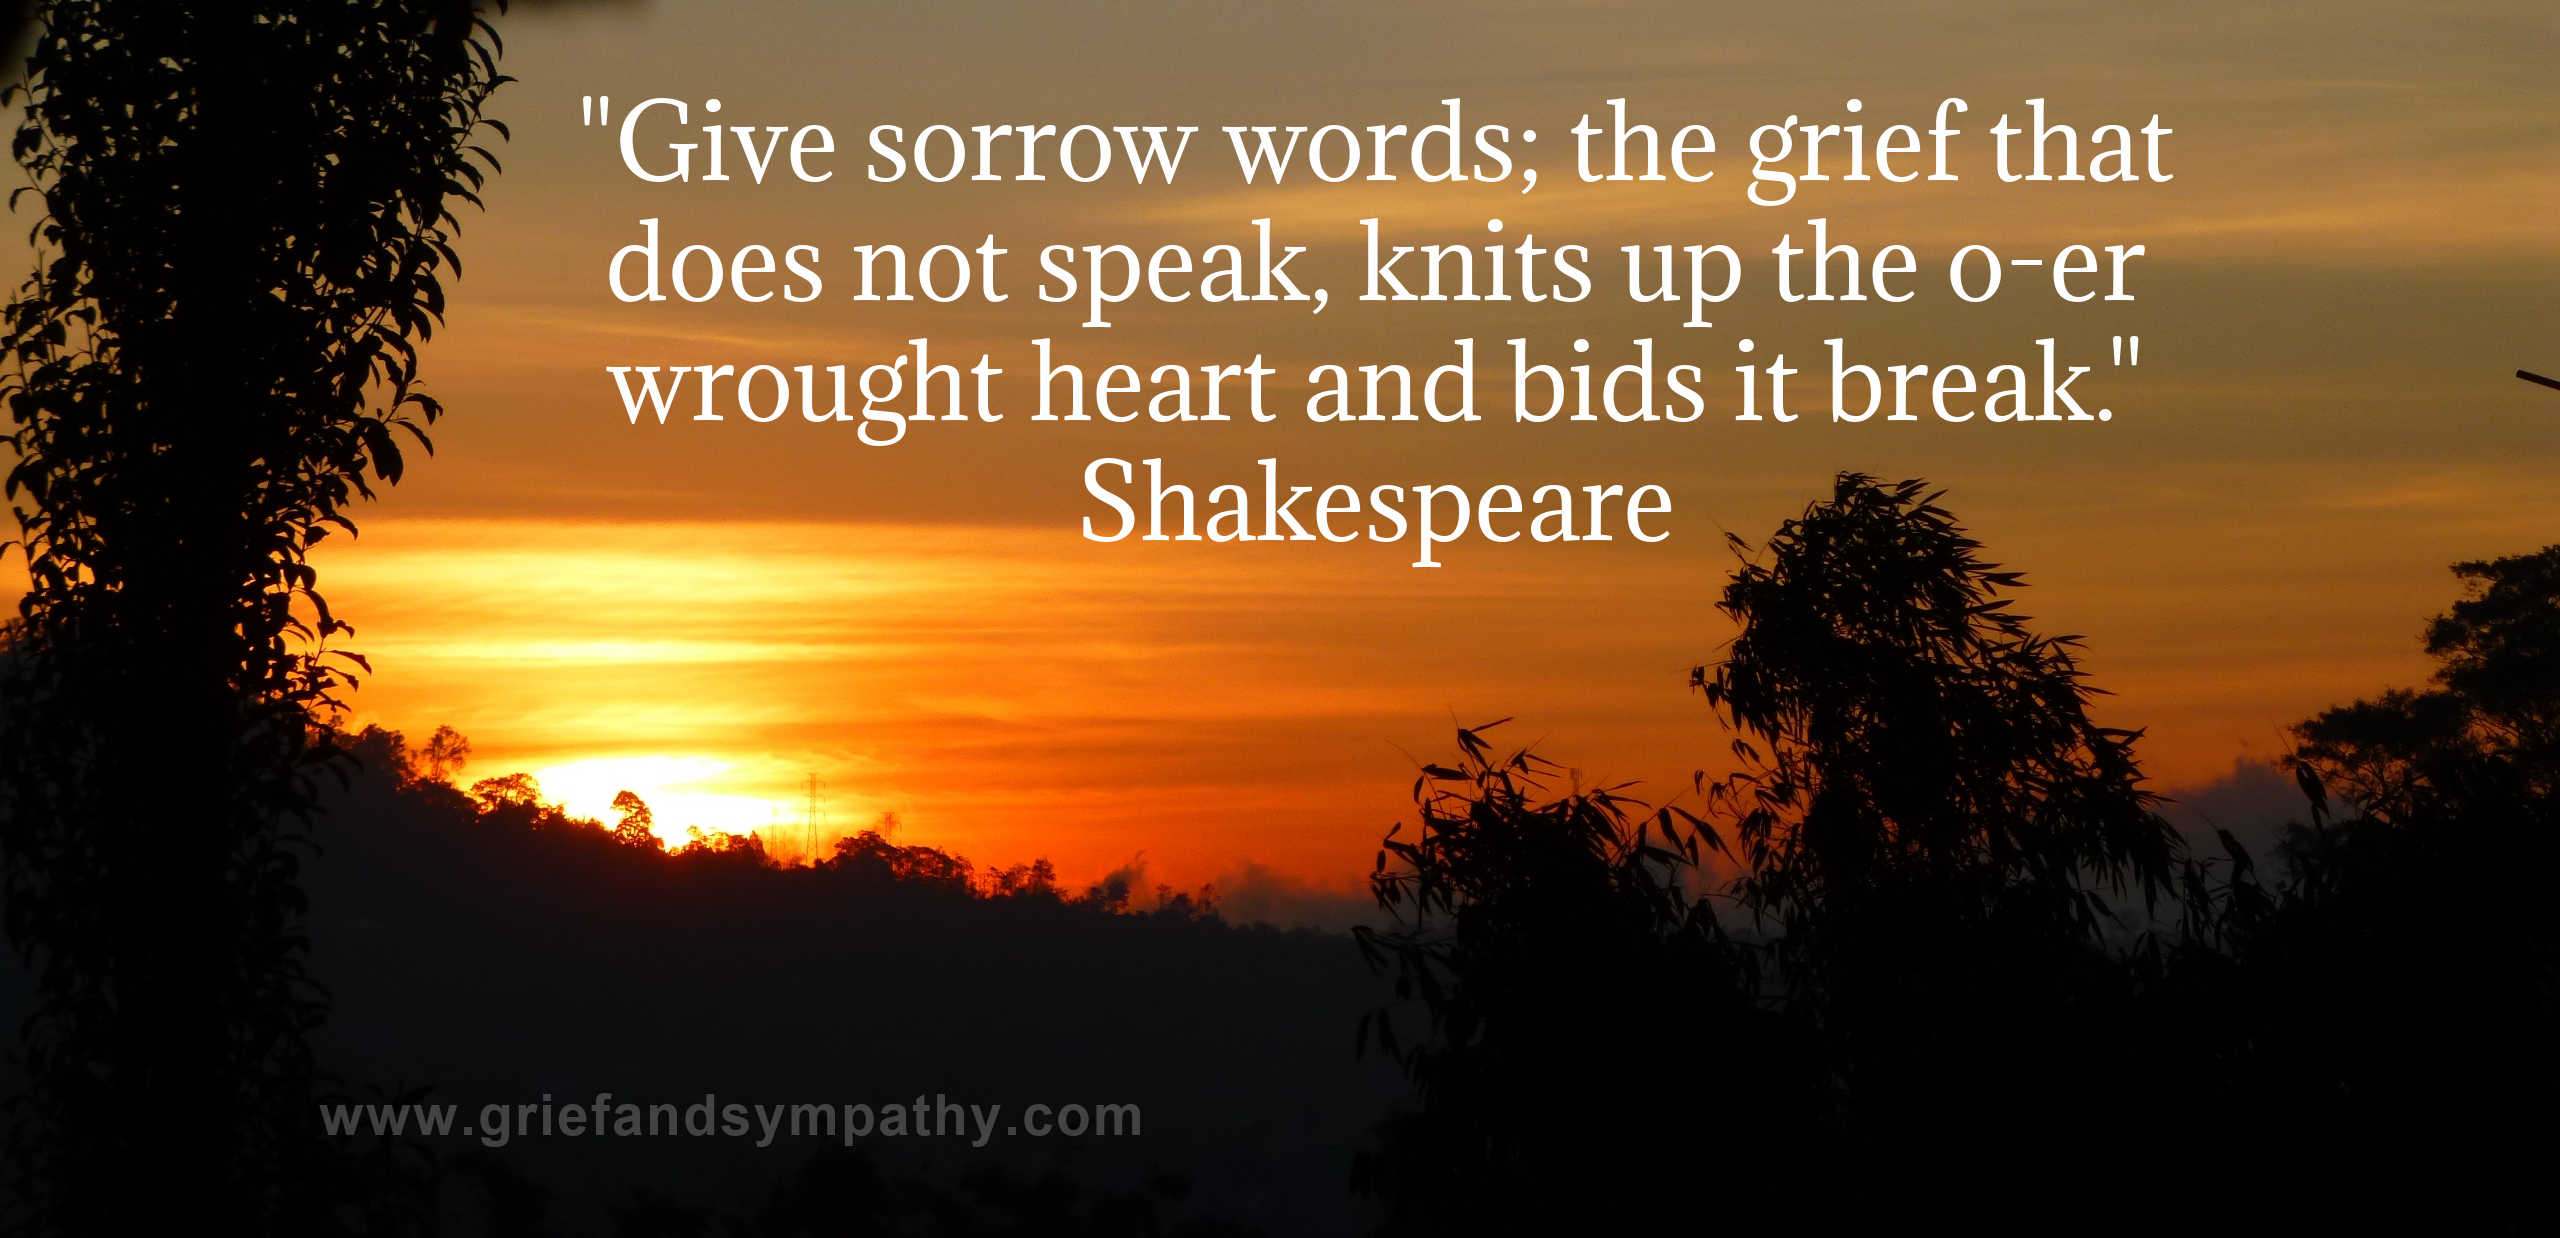 Shakespeare quote 